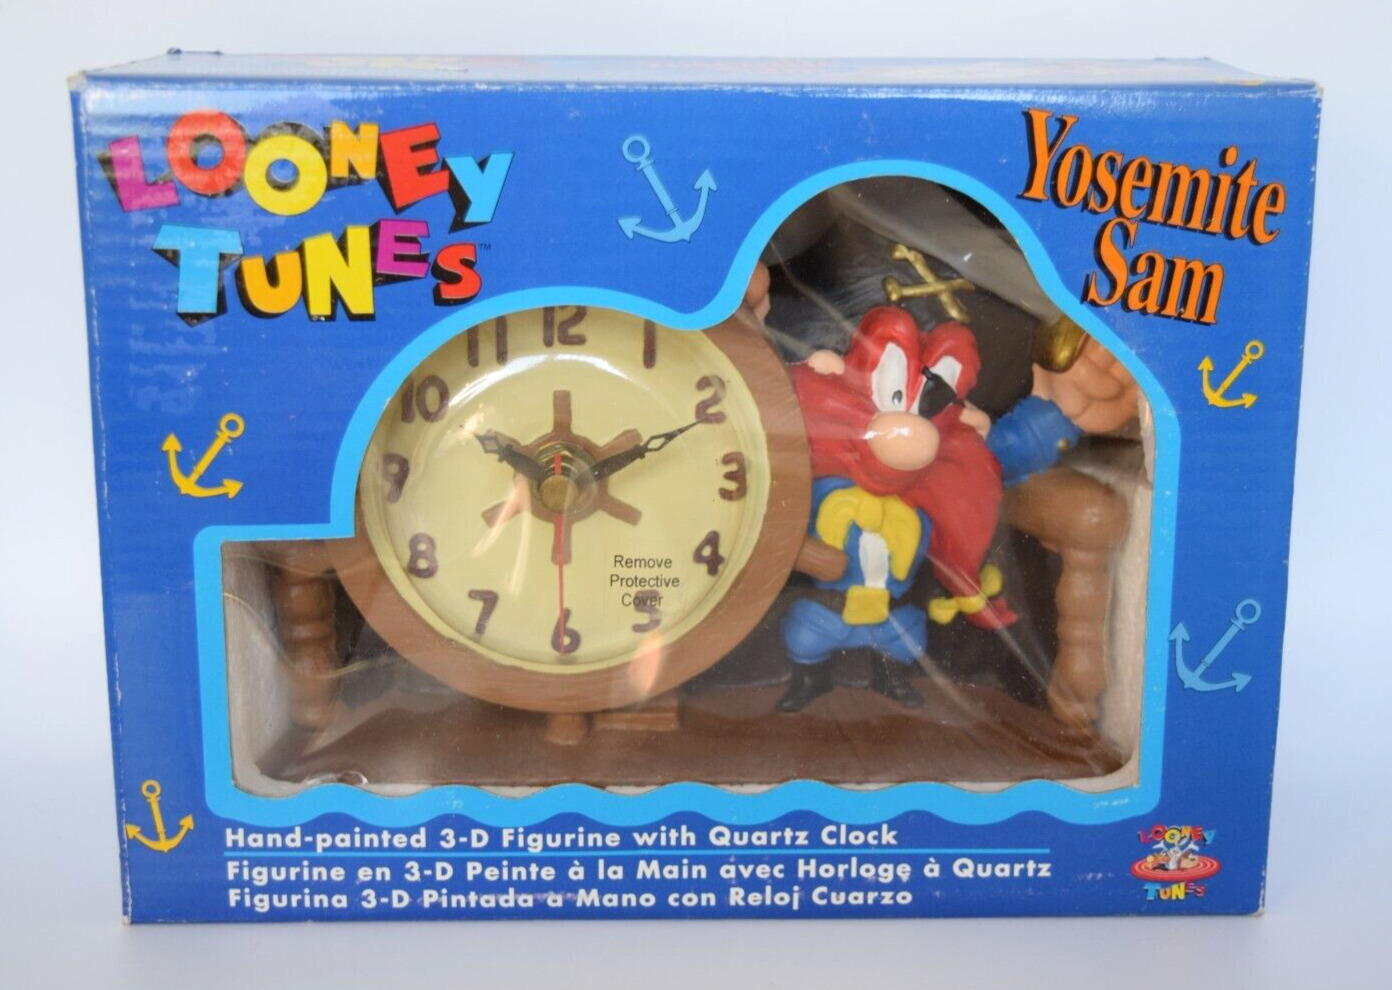 Vintage Looney Tunes Yosemite Sam Hand-Painted Figurine With Quartz Clock NIB